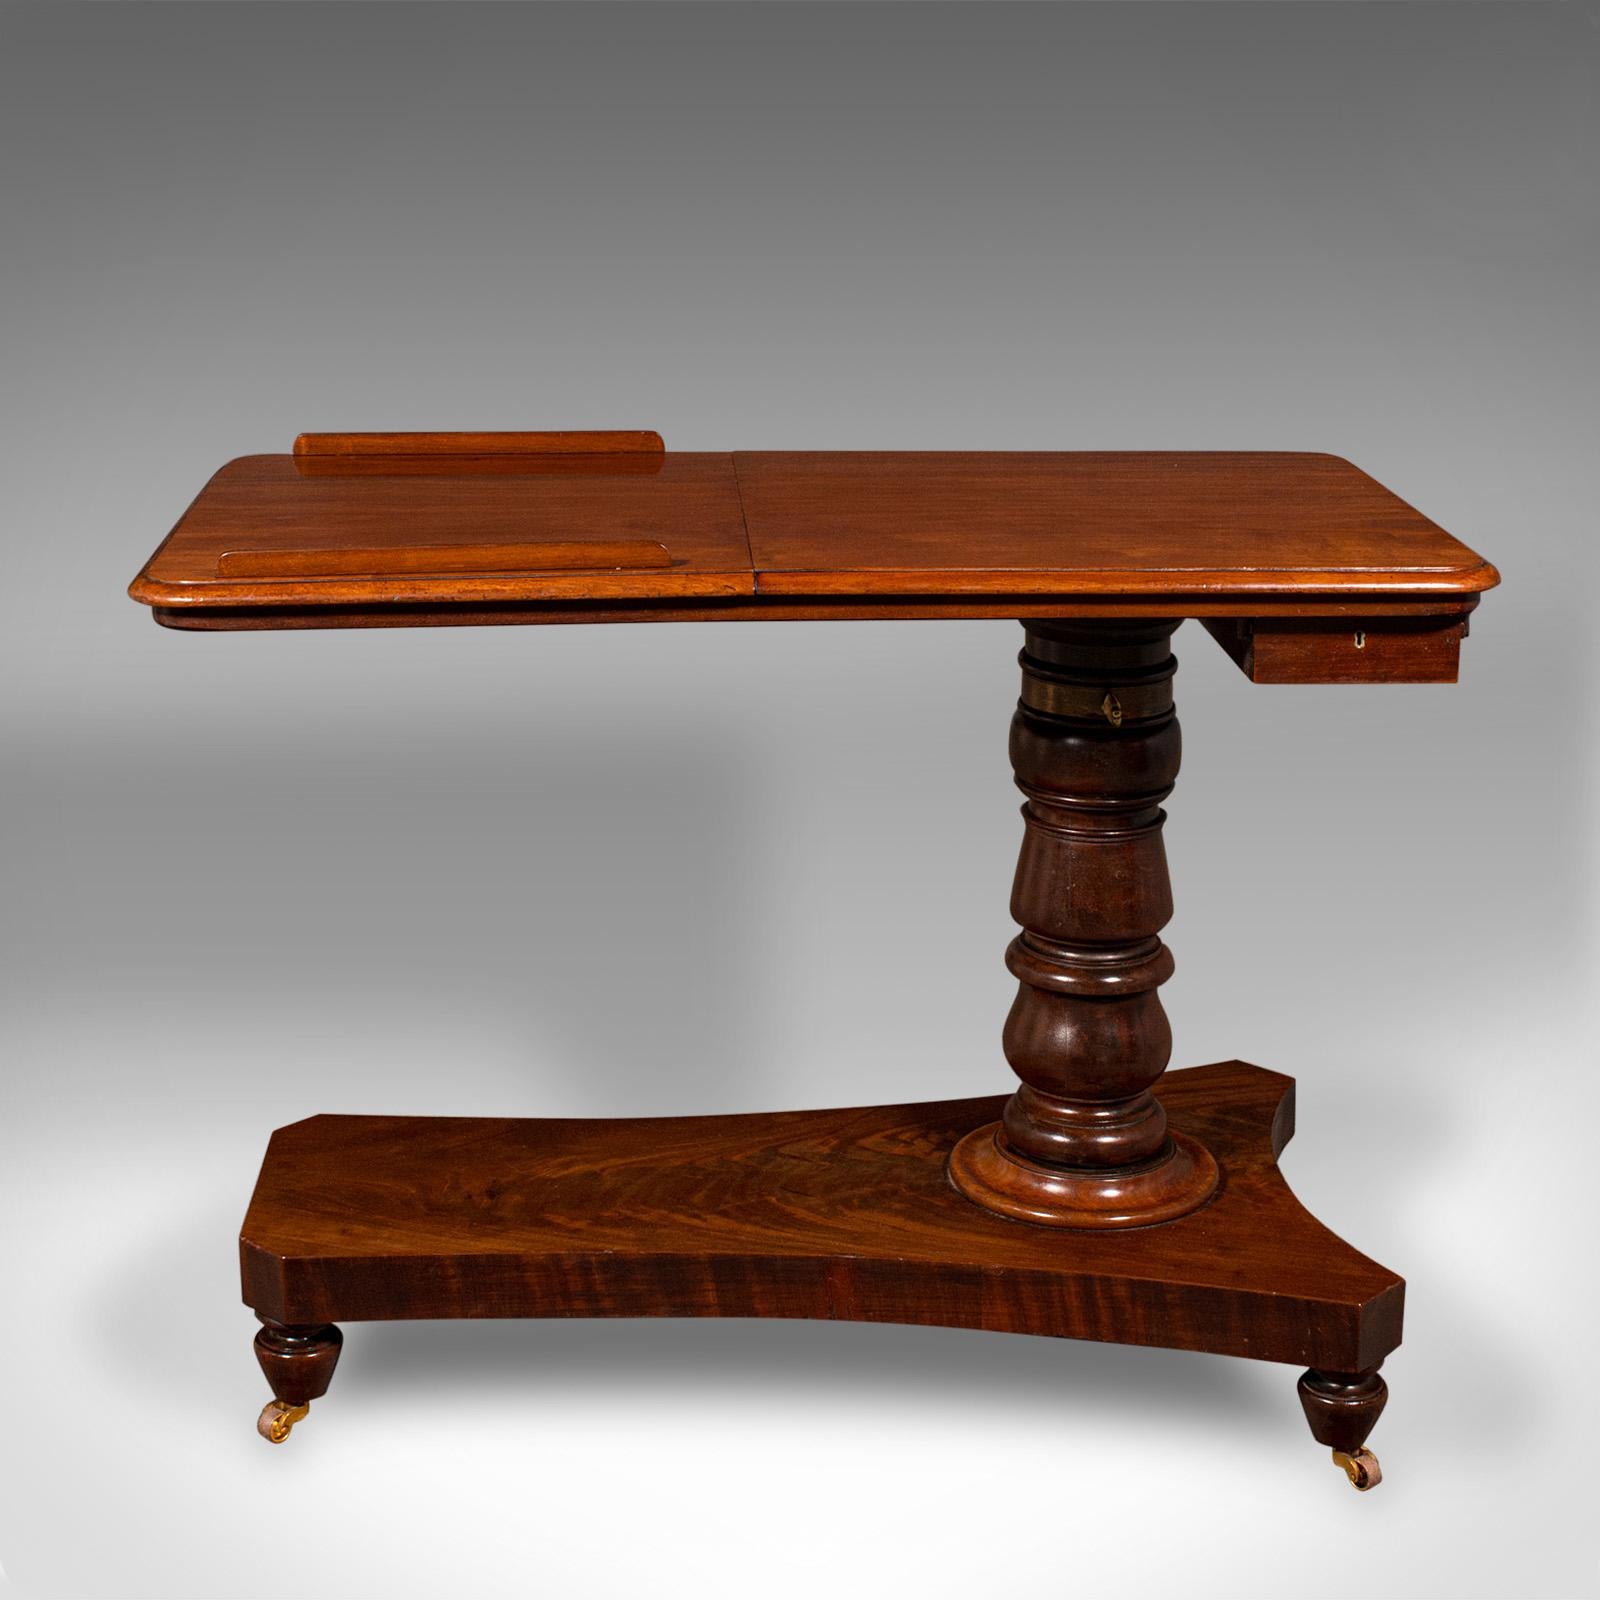 British Antique Gentleman's Reading Table, English, Adjustable, Writing Desk, Victorian